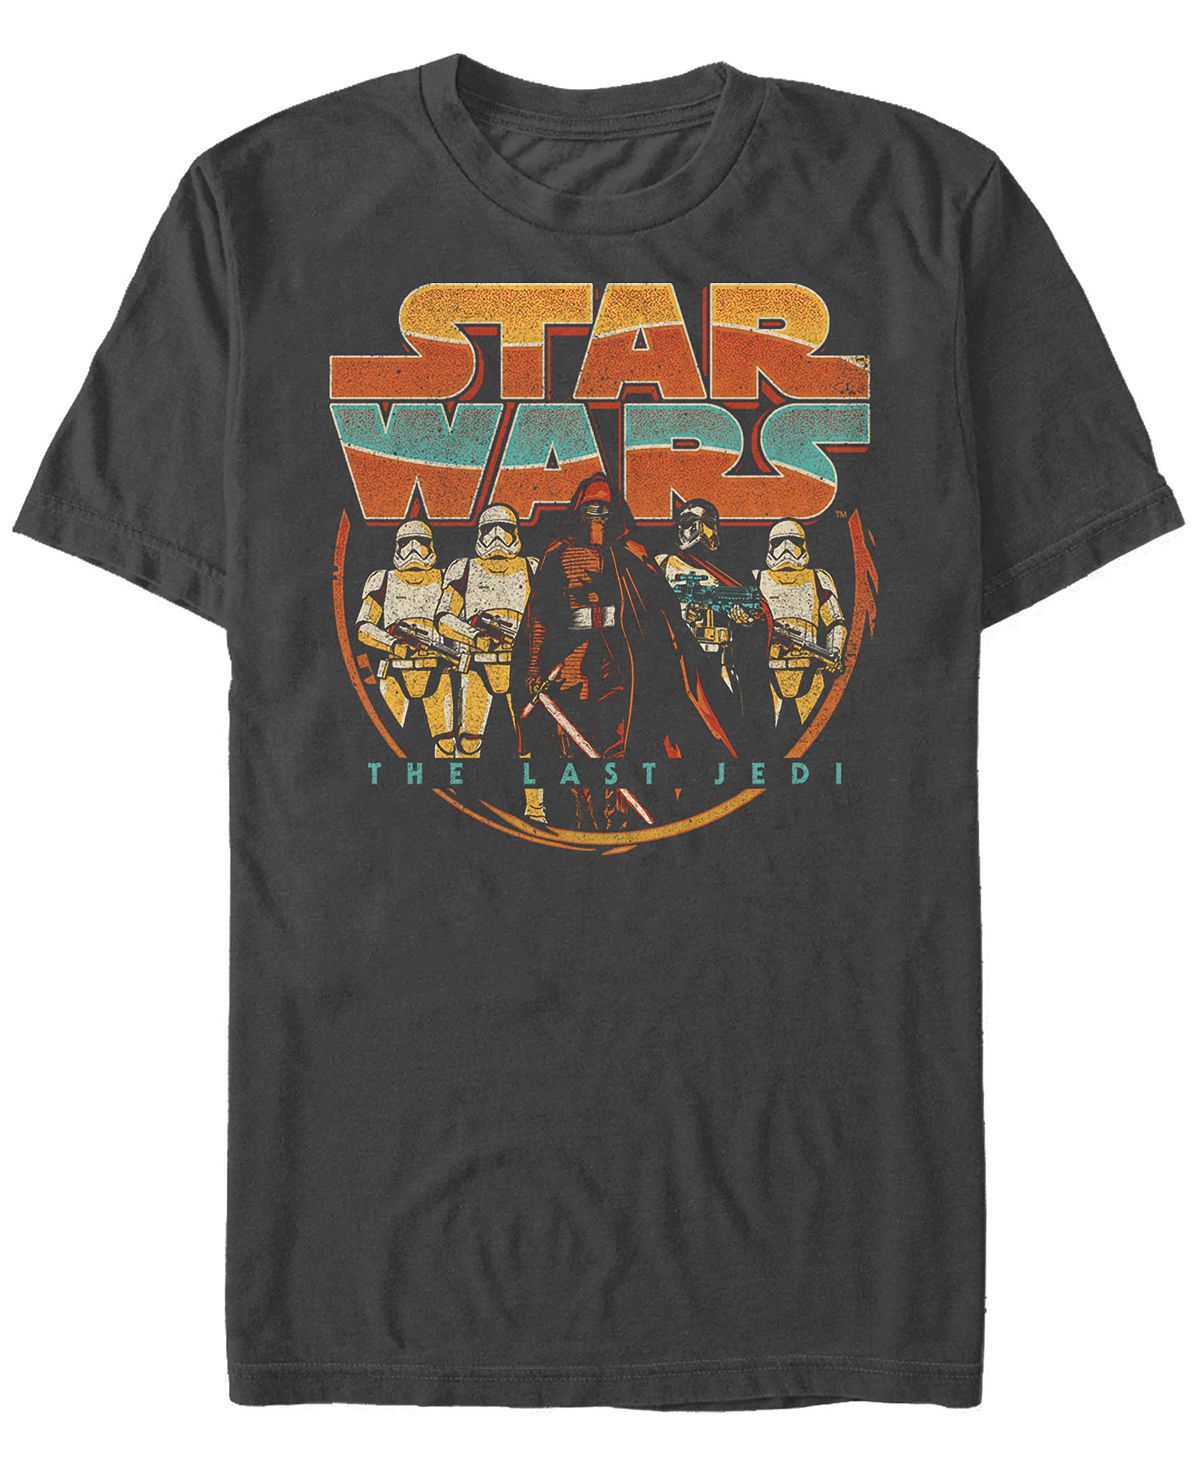 цена Звездные войны мужская футболка с коротким рукавом the last jedi kylo ren soldiers Fifth Sun, мульти